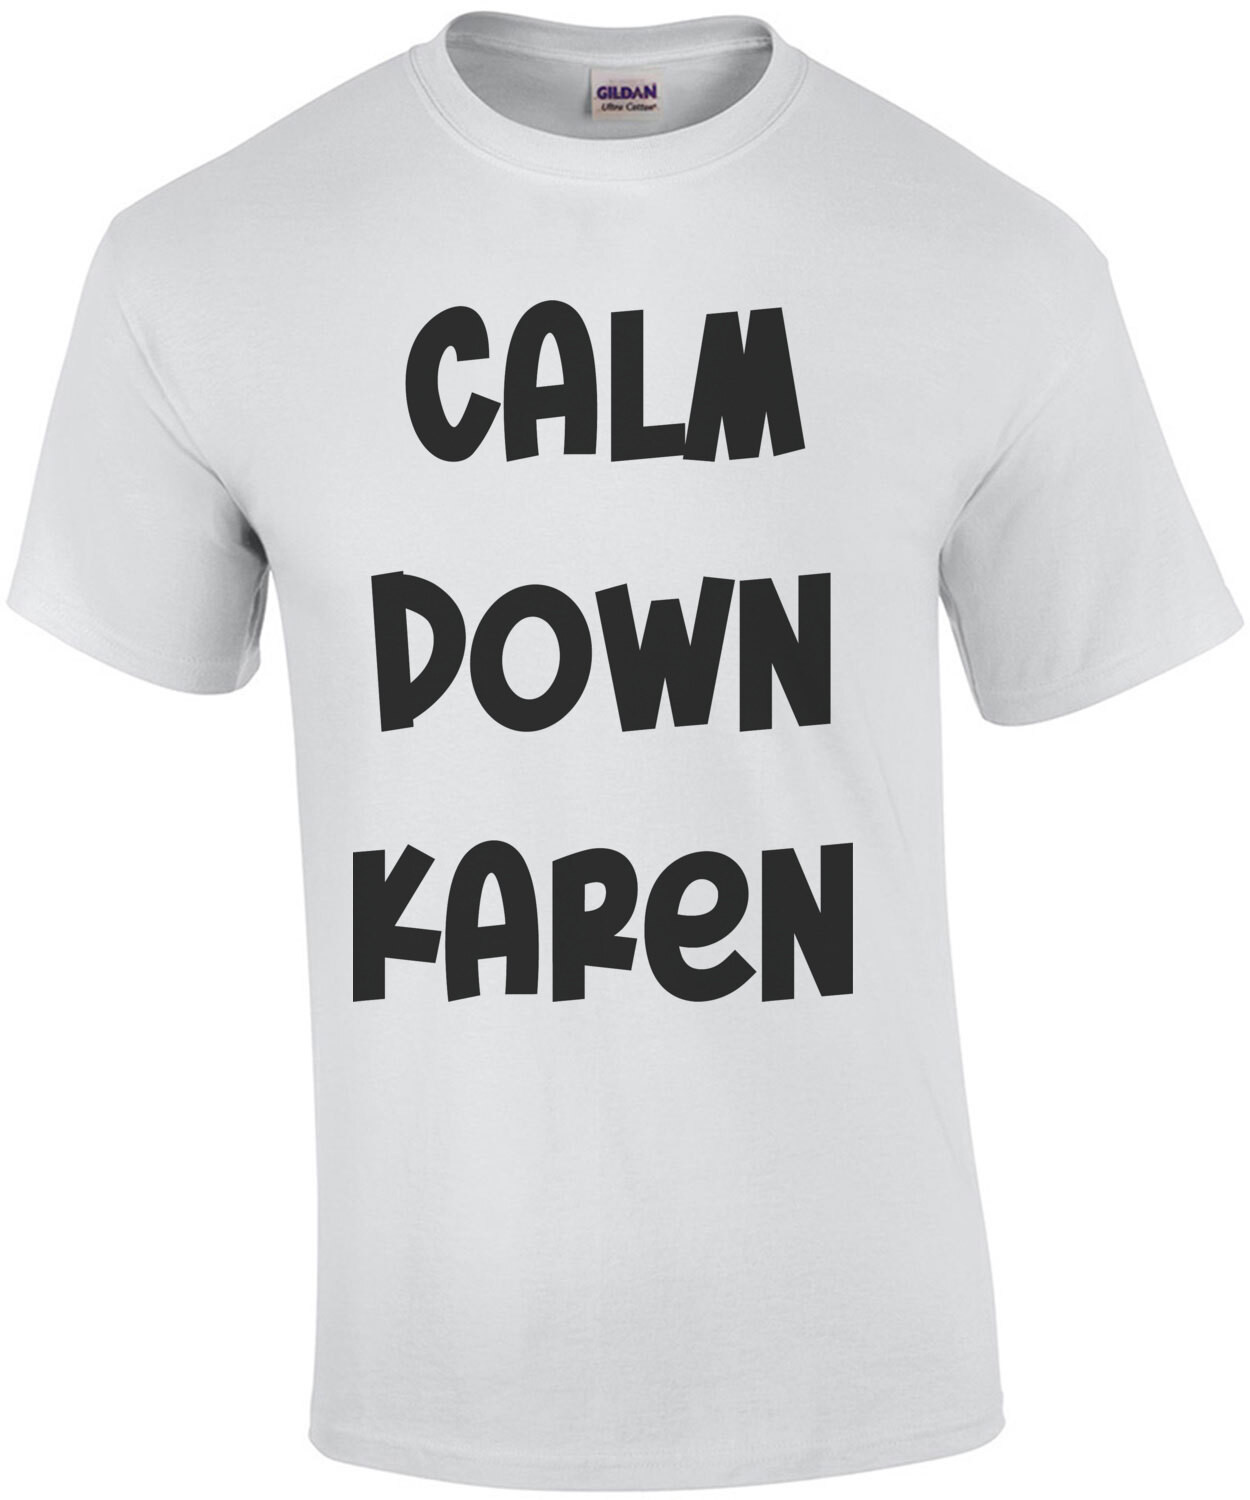 Calm Down Karen Funny Shirt